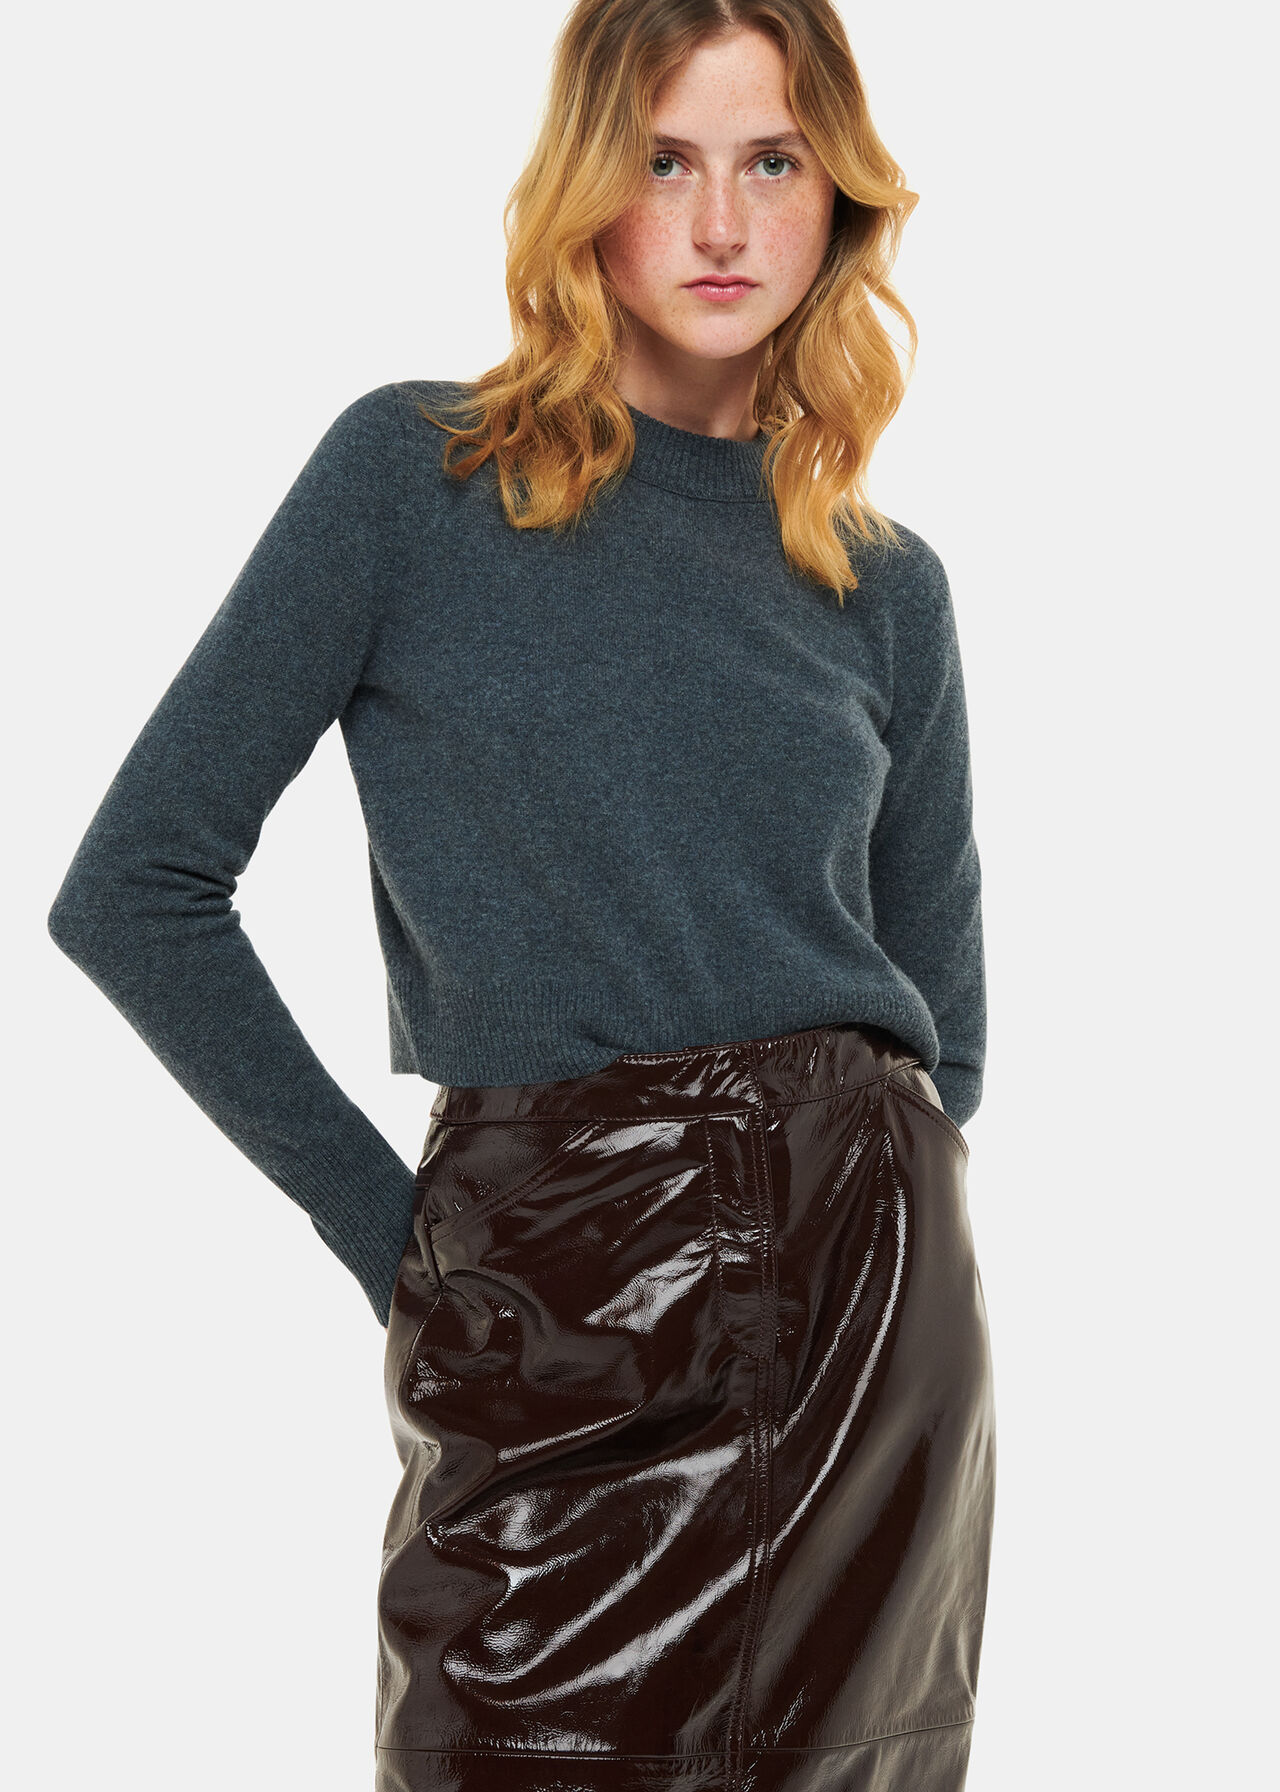 Rachel Patent Leather Skirt